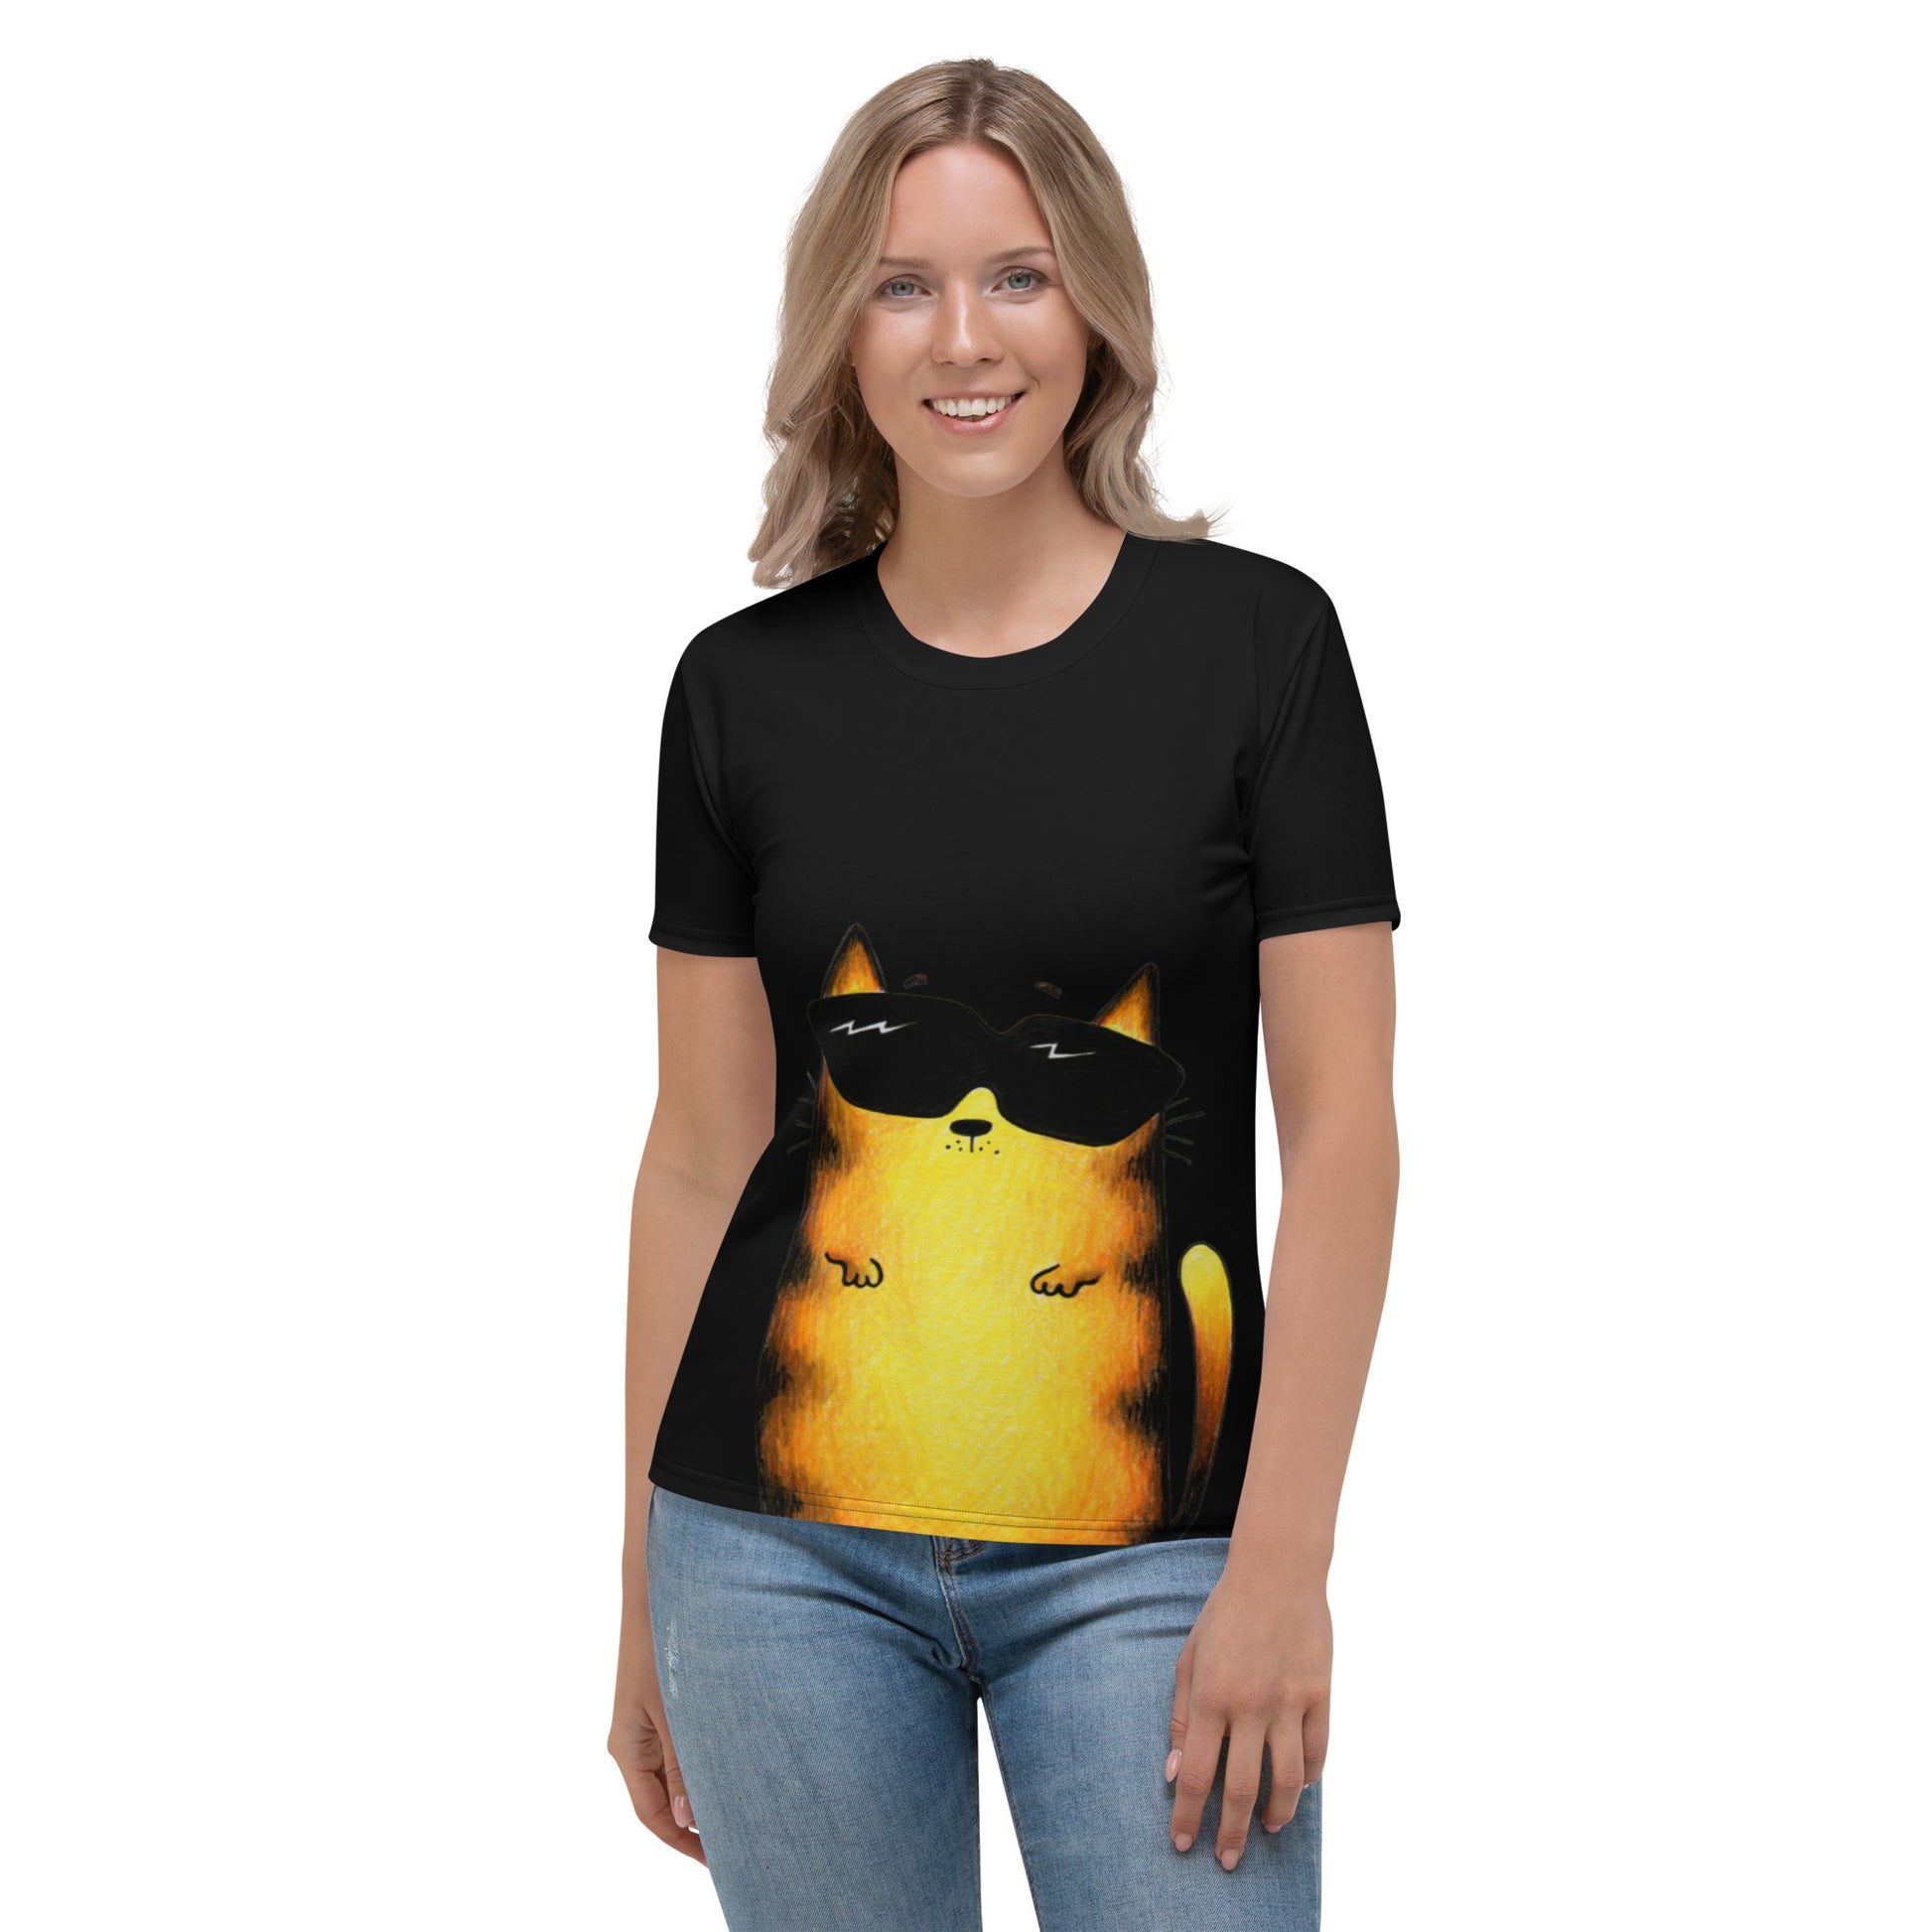 Black ladies t-shirt with yellow cat design/print